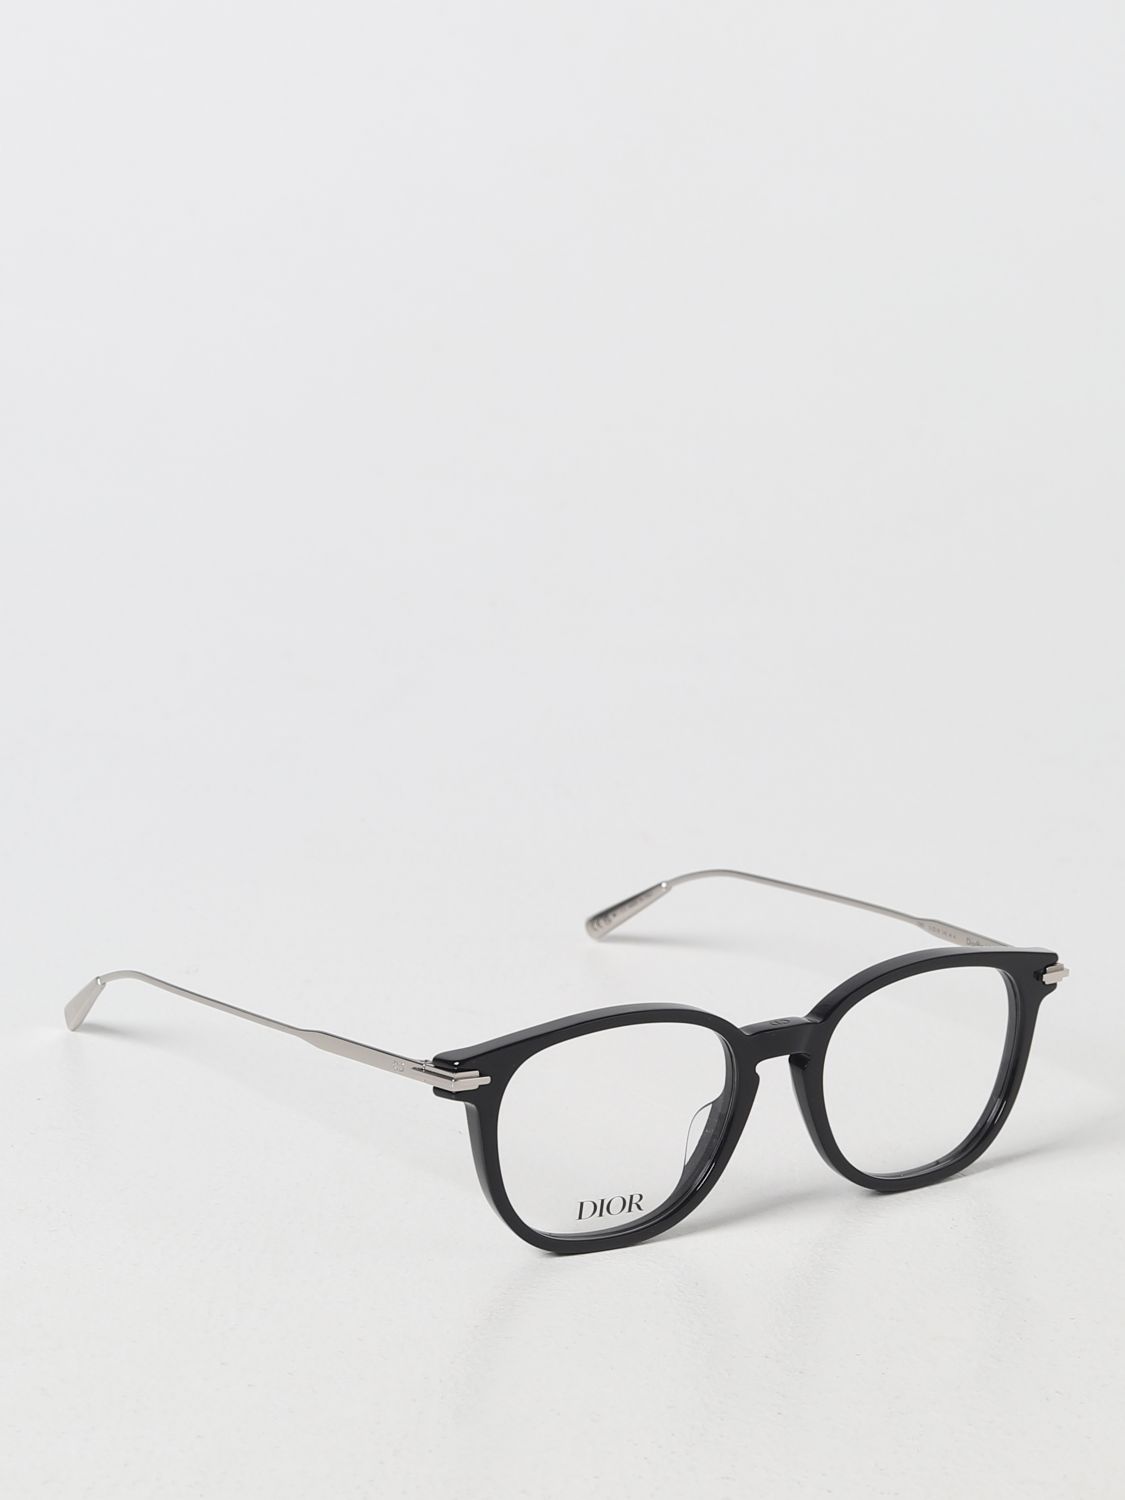 Christian Dior Sunglasses Men AL13520T52MVBLUEMTBLACK Plastic 16785